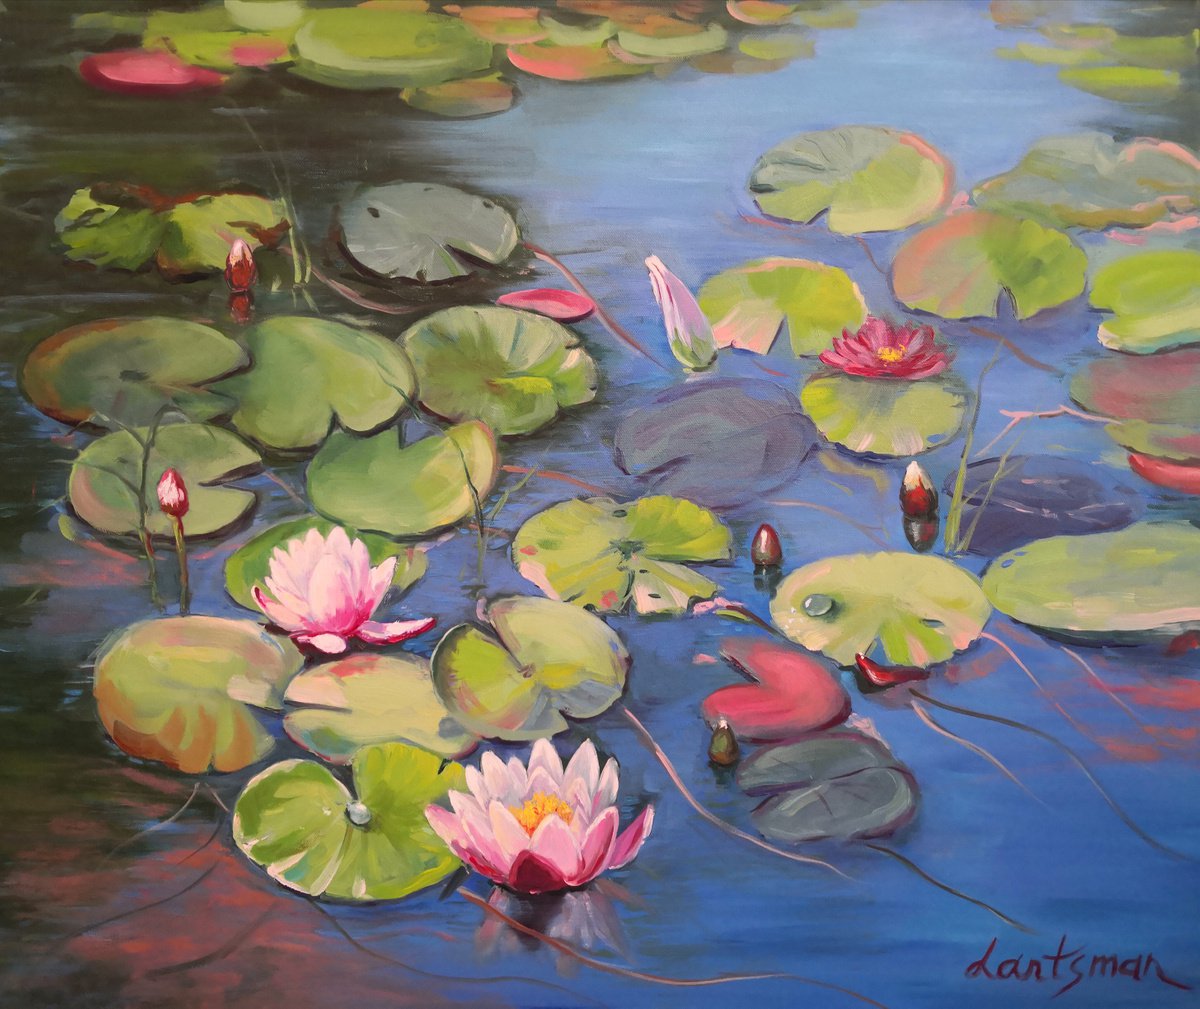 Waterlily pond with lotus flowers landscape by Jane Lantsman